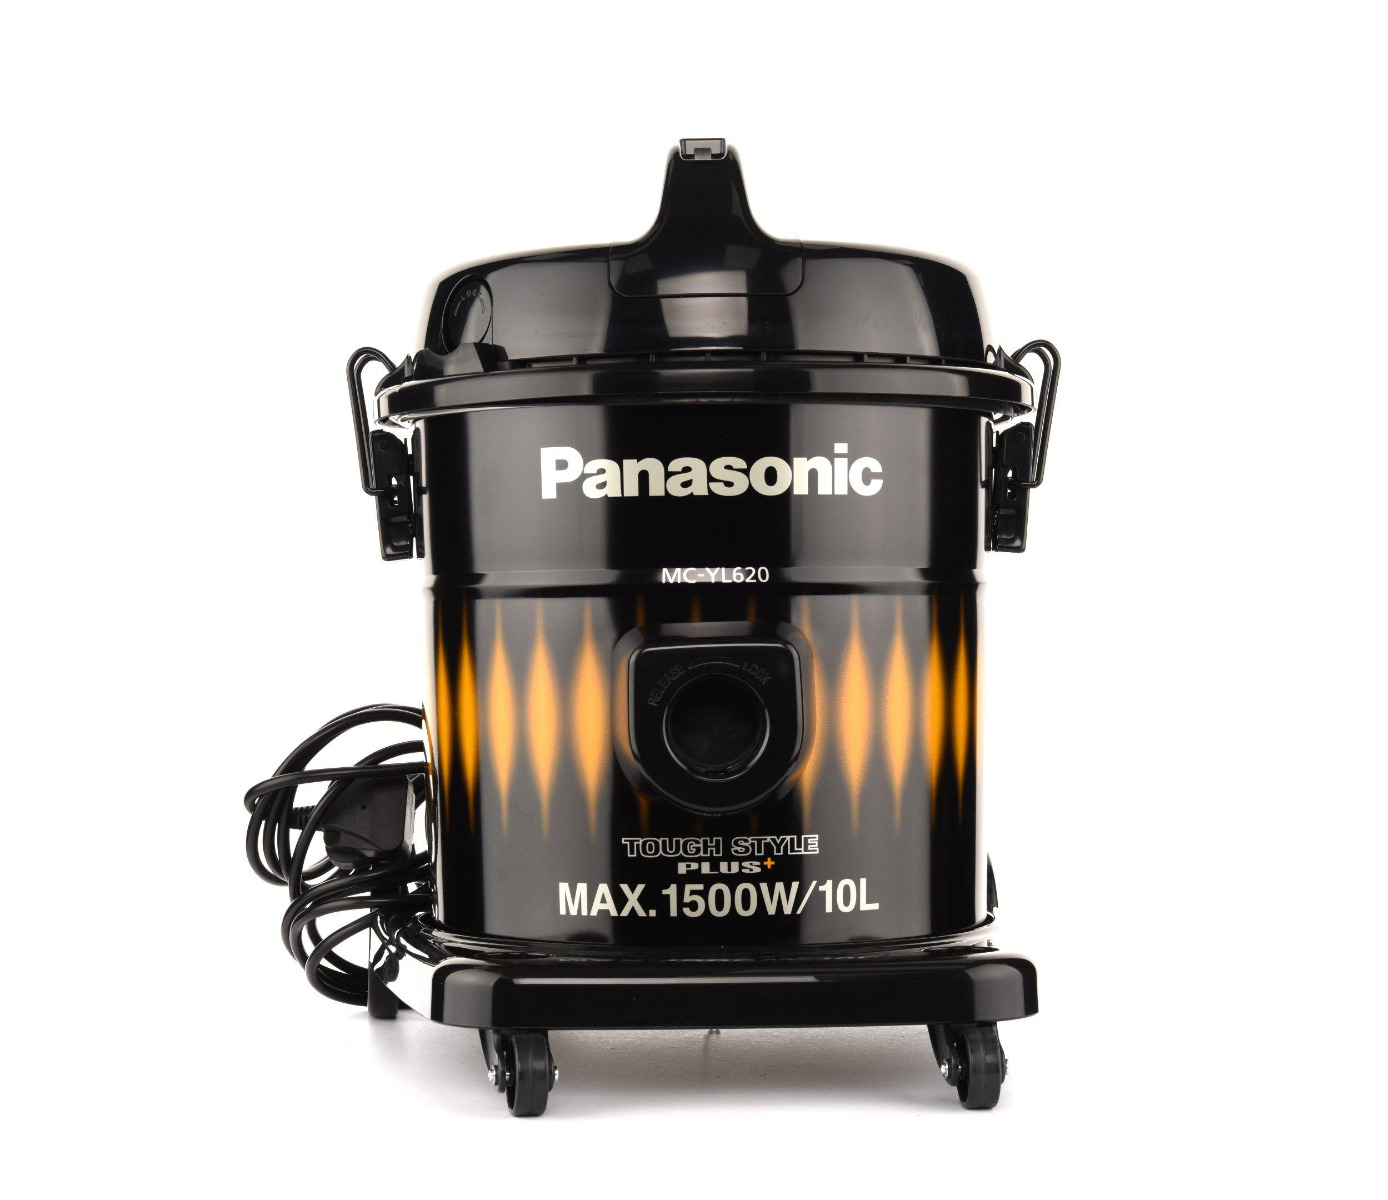 Panasonic Vacuum Cleaner 1500W, Black ,MC-YL620Y747